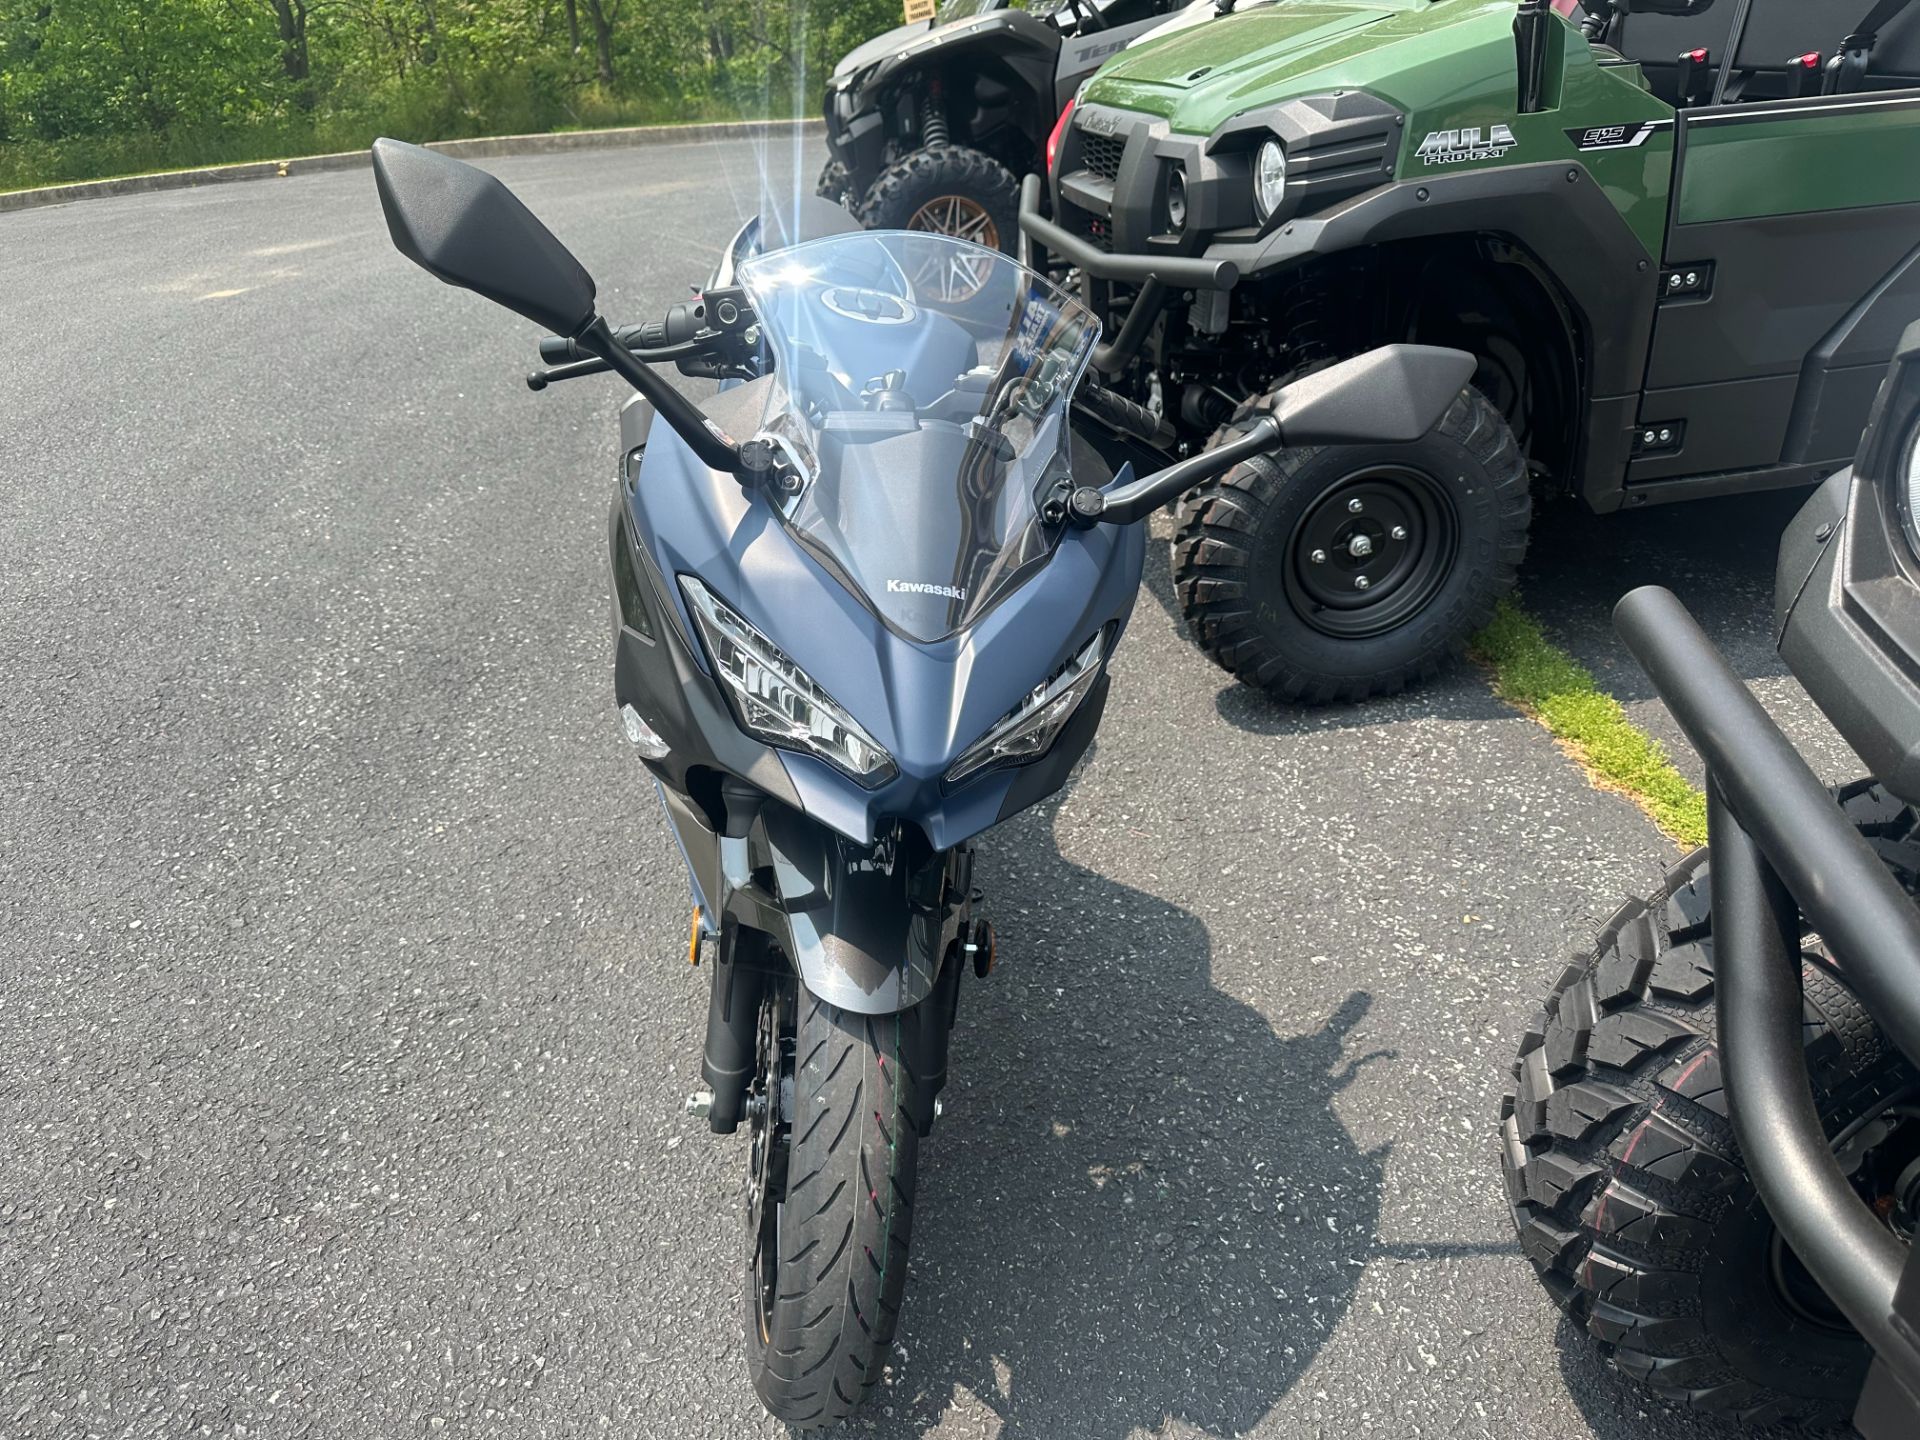 2023 Kawasaki Ninja 400 in Mechanicsburg, Pennsylvania - Photo 6